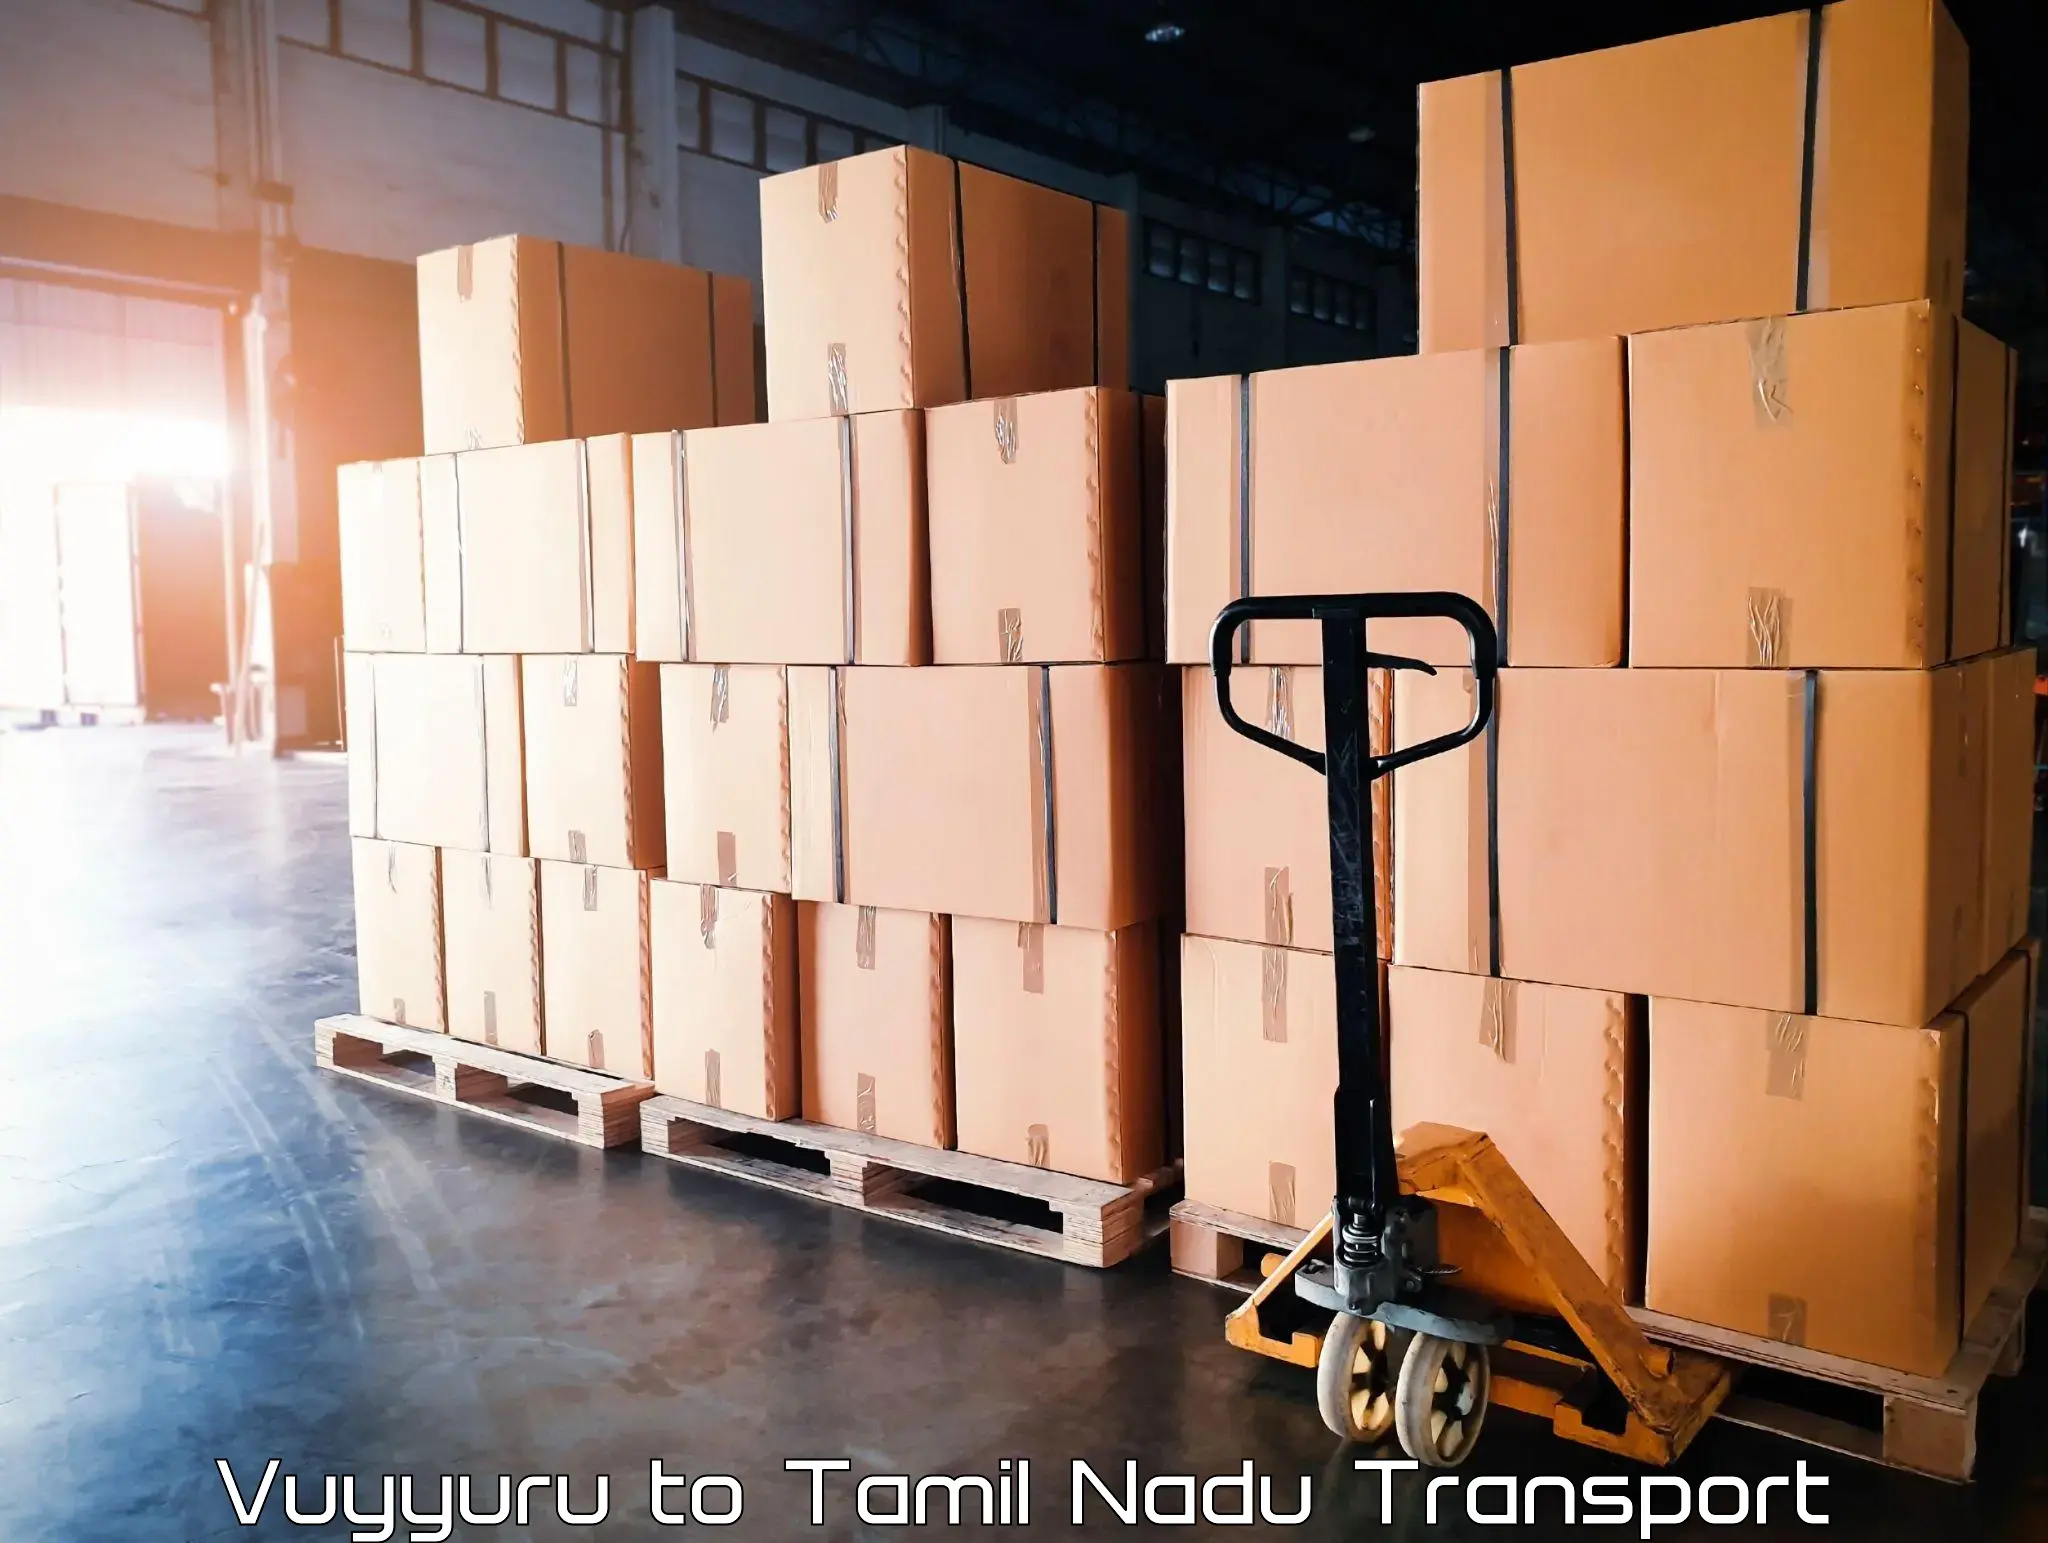 Transport bike from one state to another Vuyyuru to Avinashi